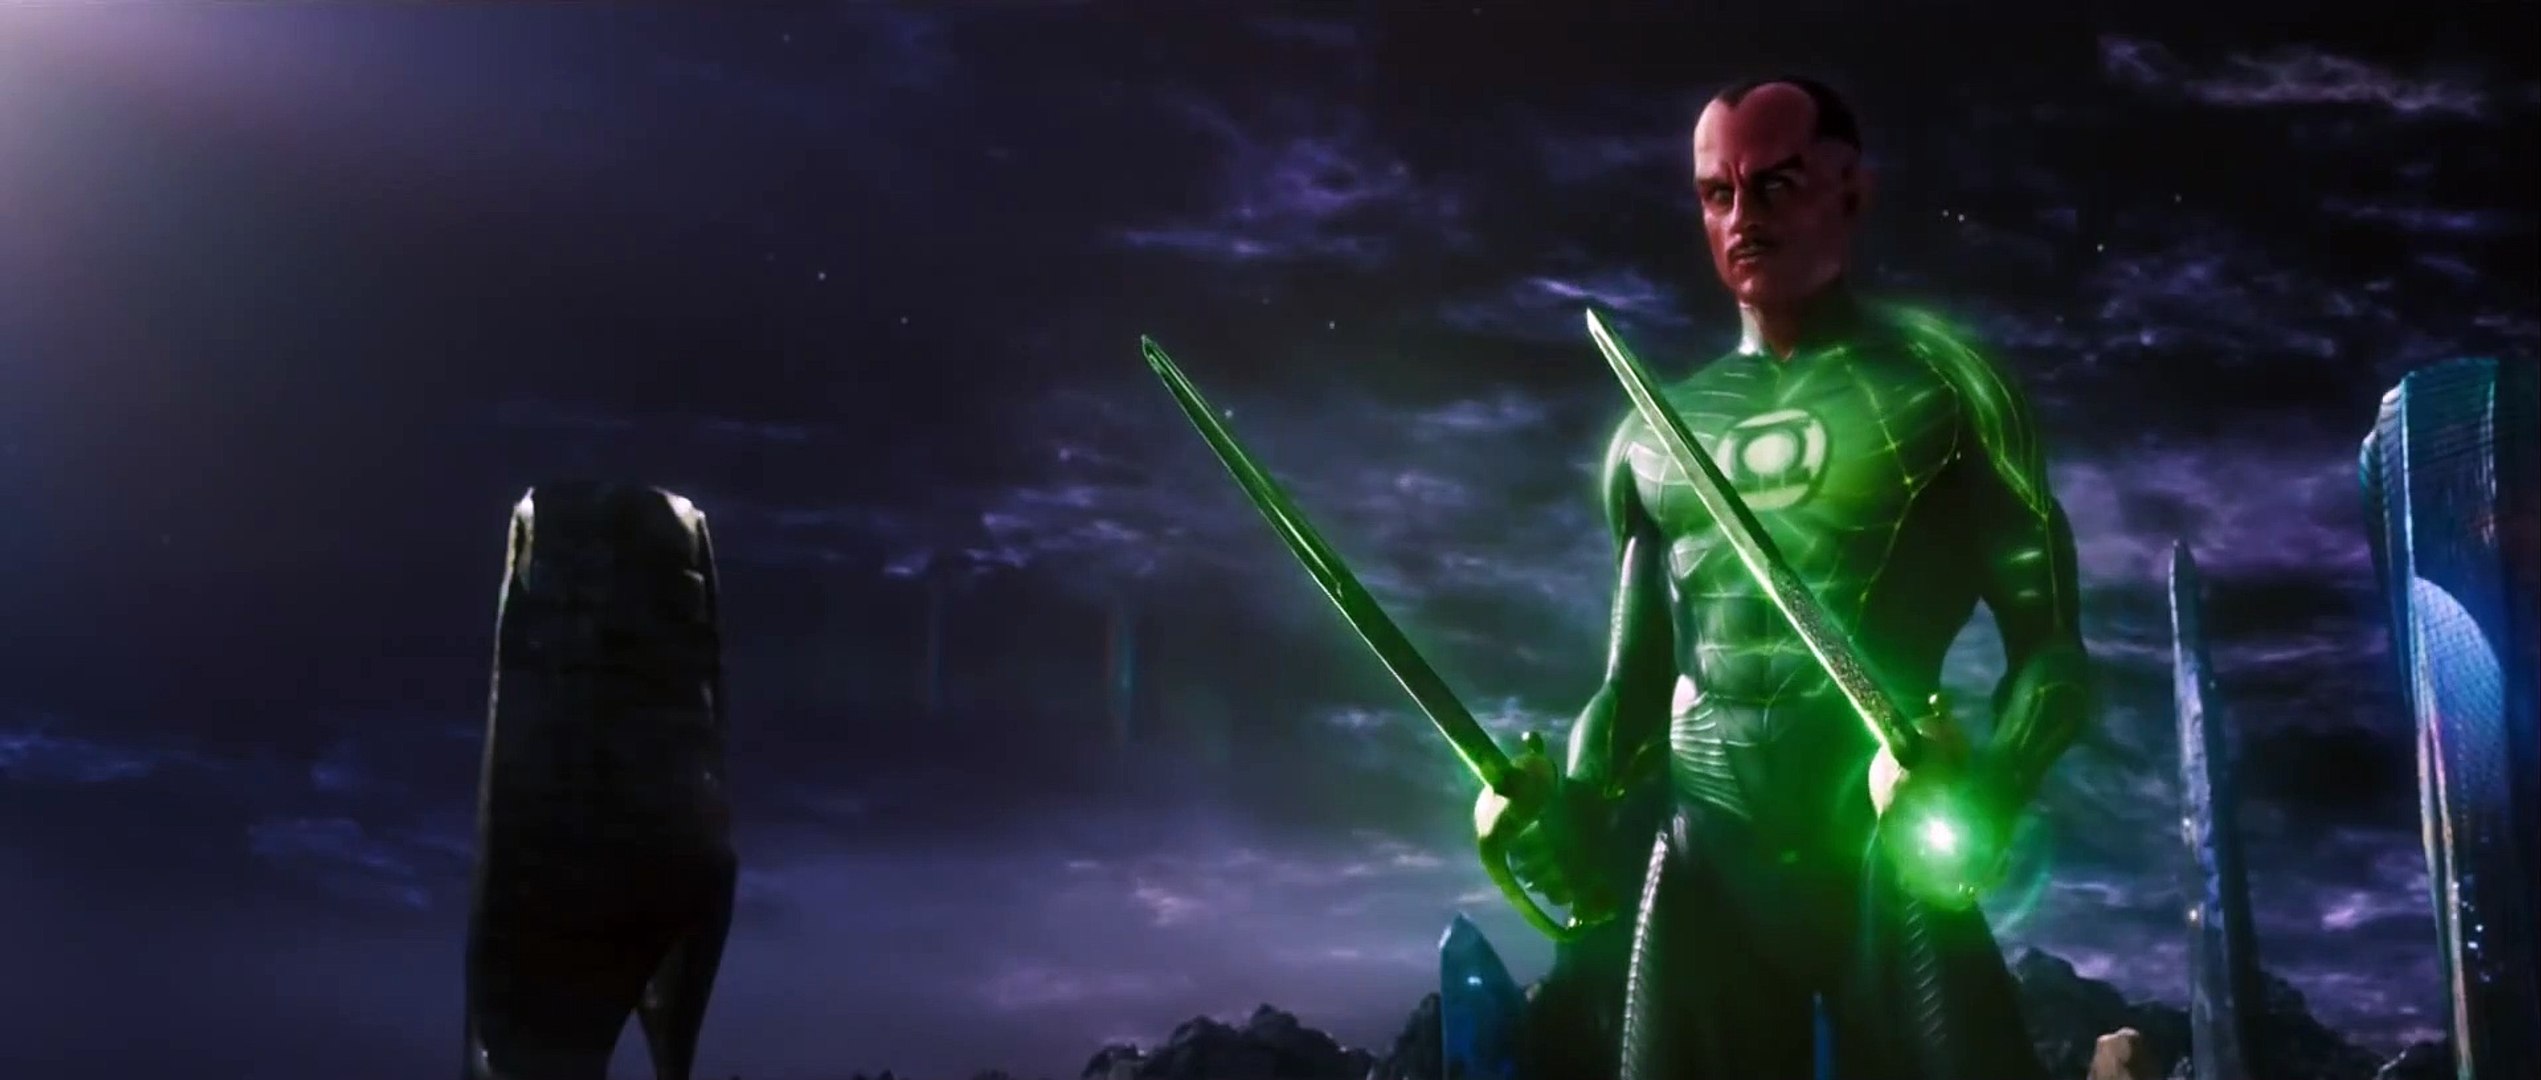 Green Lantern - Bande Annonce 4 Officielle (VF) - Ryan Reynolds / Blake  Lively / Peter Sarsgaard - Vidéo Dailymotion